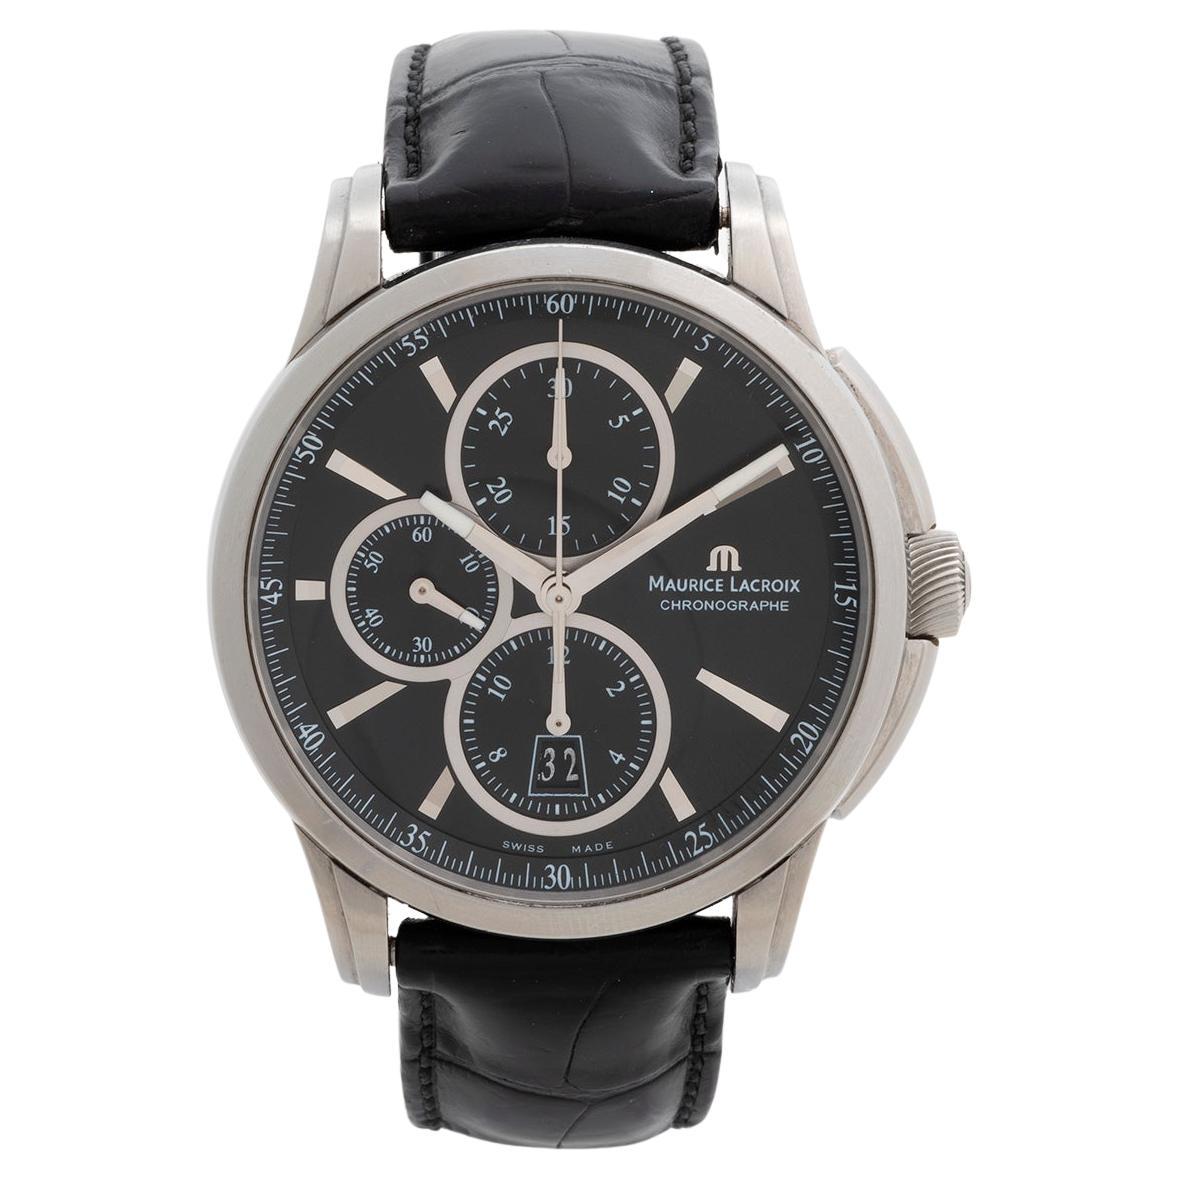 Maurice Lacroix Pontos Automatic Chronograph Wristwatch. Year 2010.